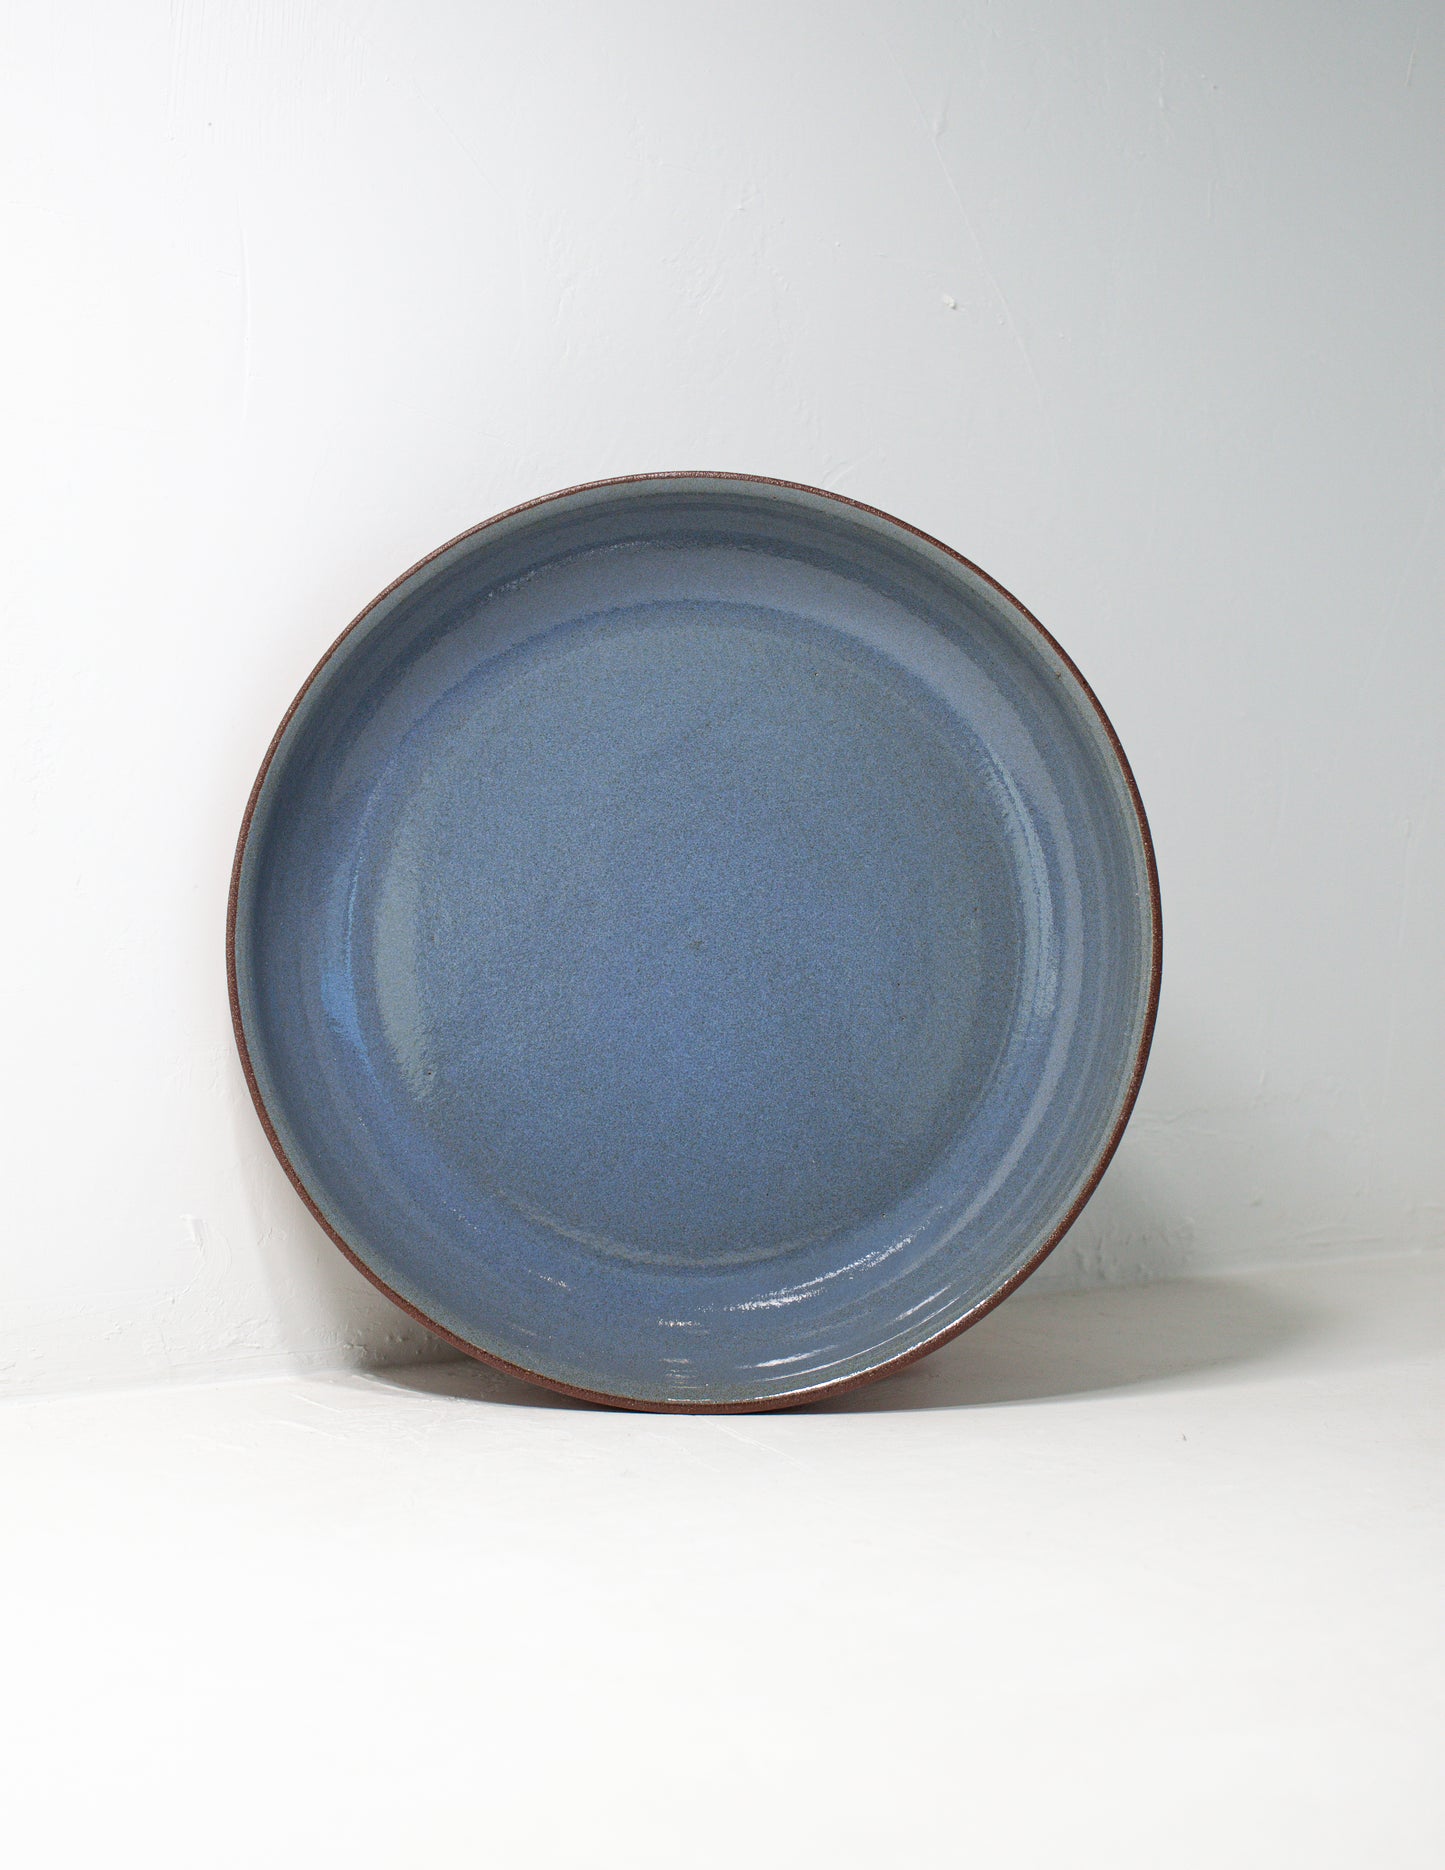 Handmade serving dish in blue glaze